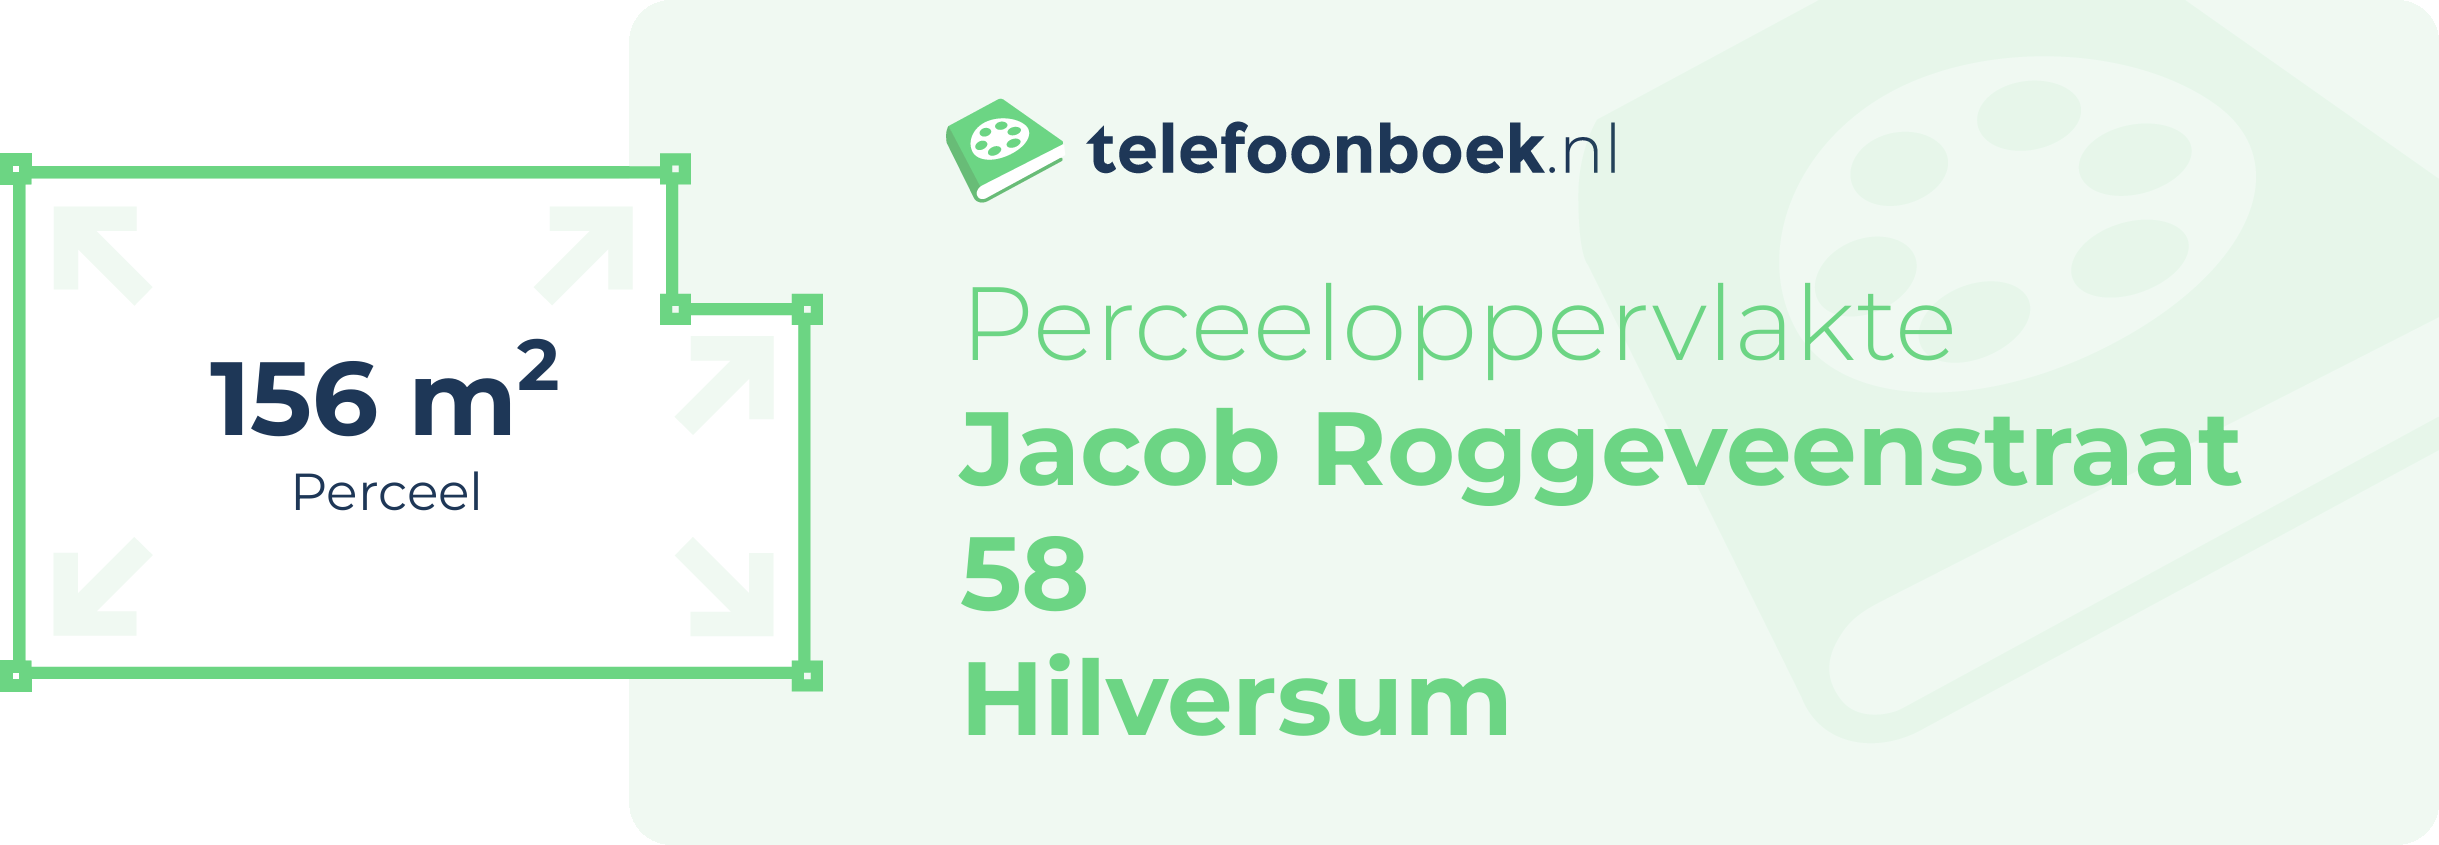 Perceeloppervlakte Jacob Roggeveenstraat 58 Hilversum